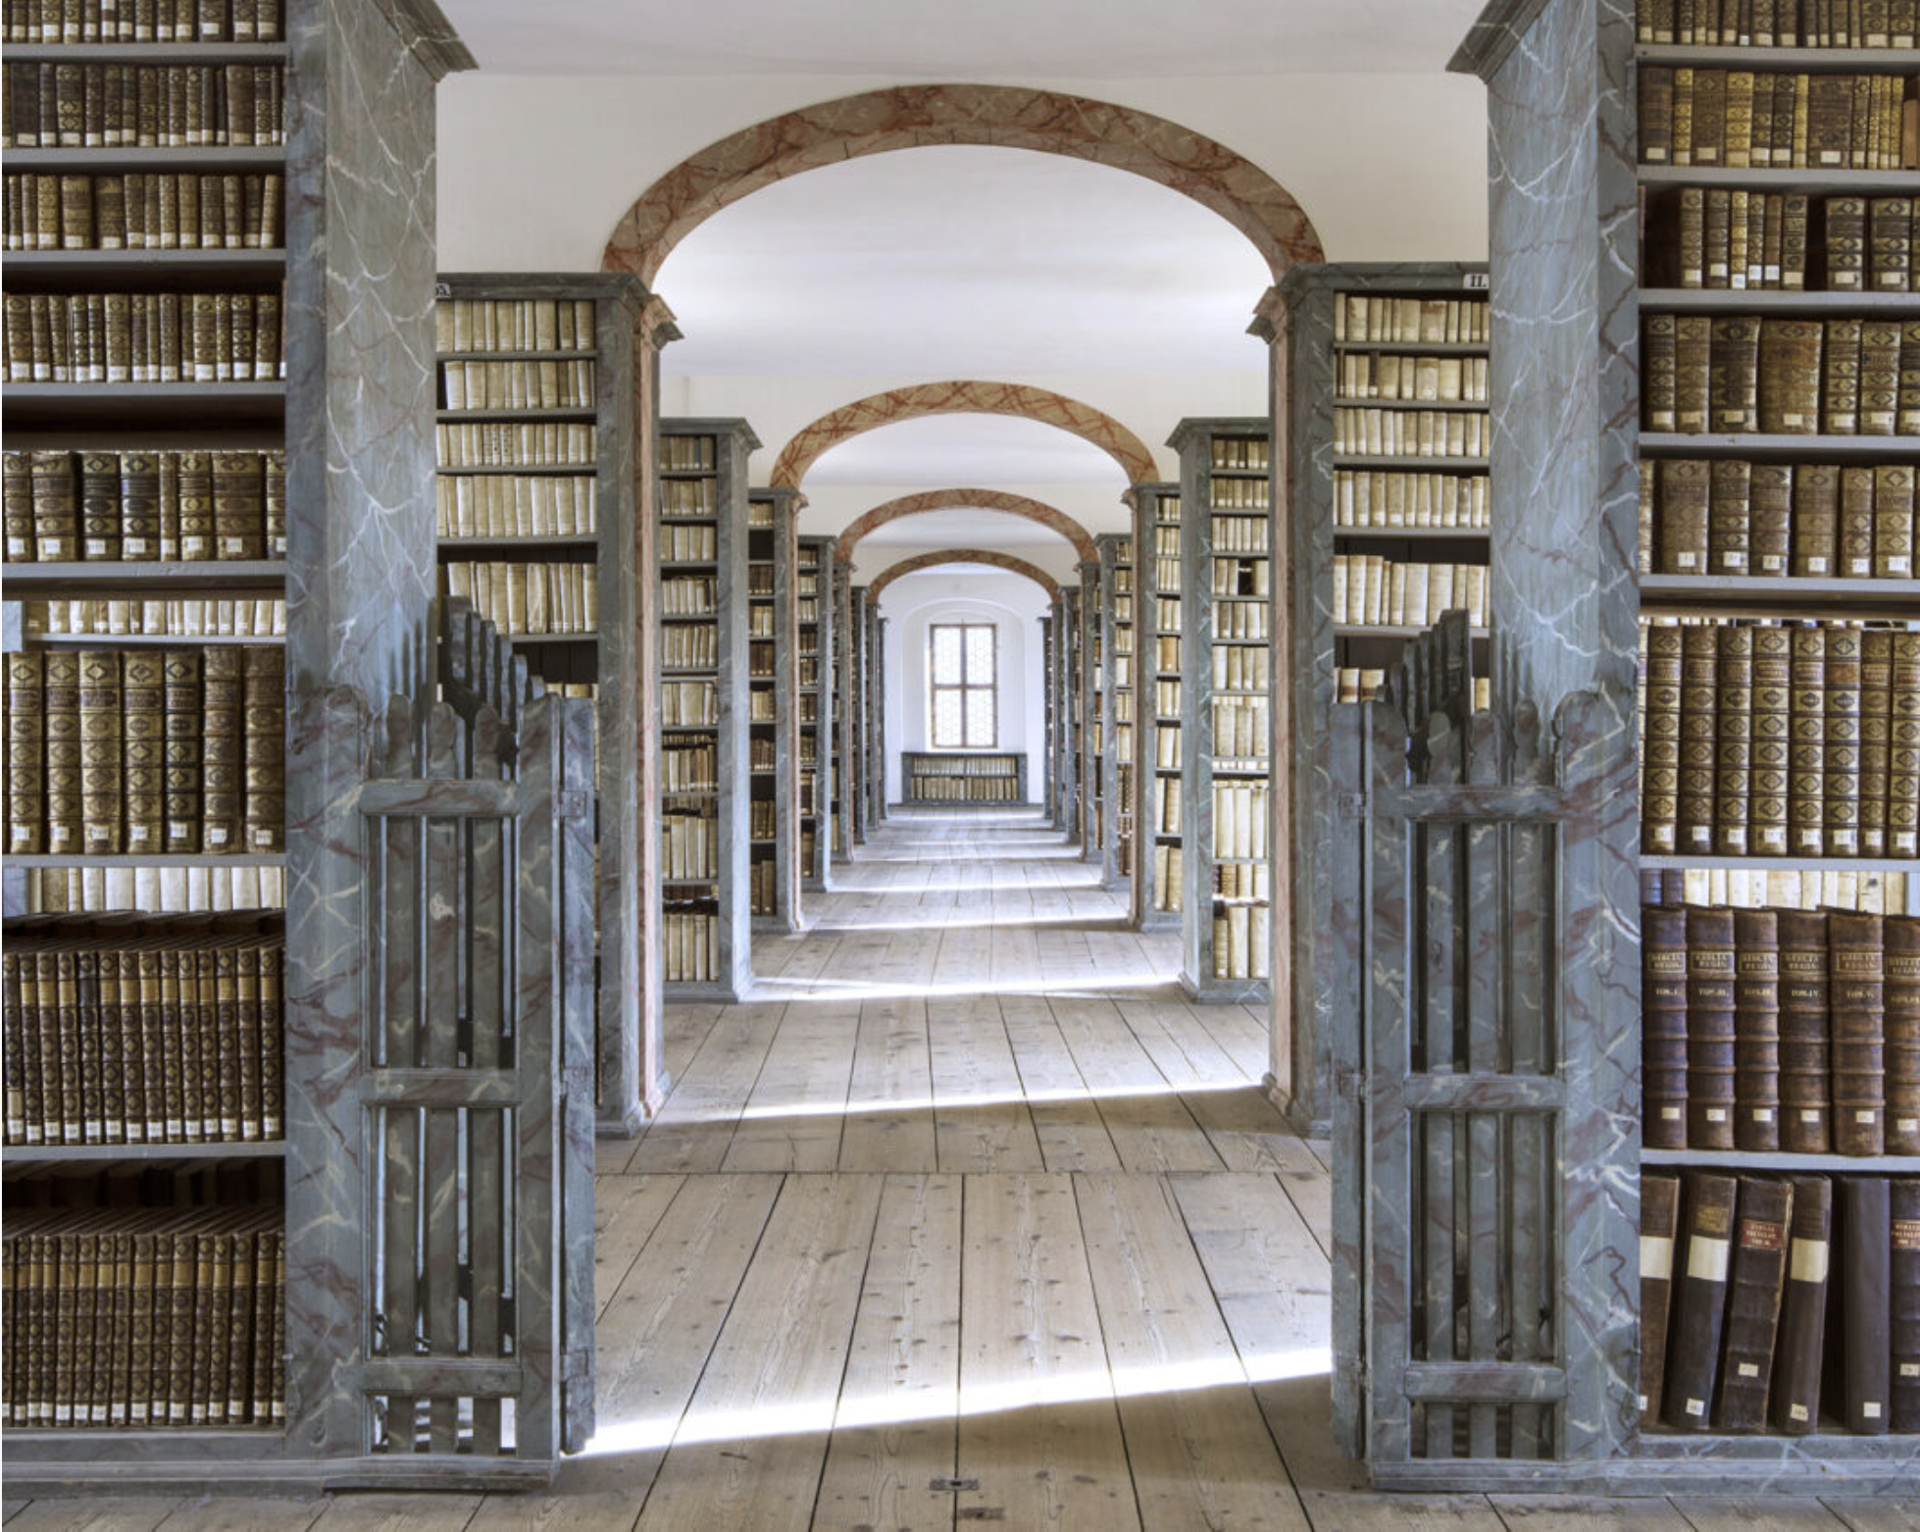 Library of Francke Foundations, Halle, Germany by Reinhard Gorner